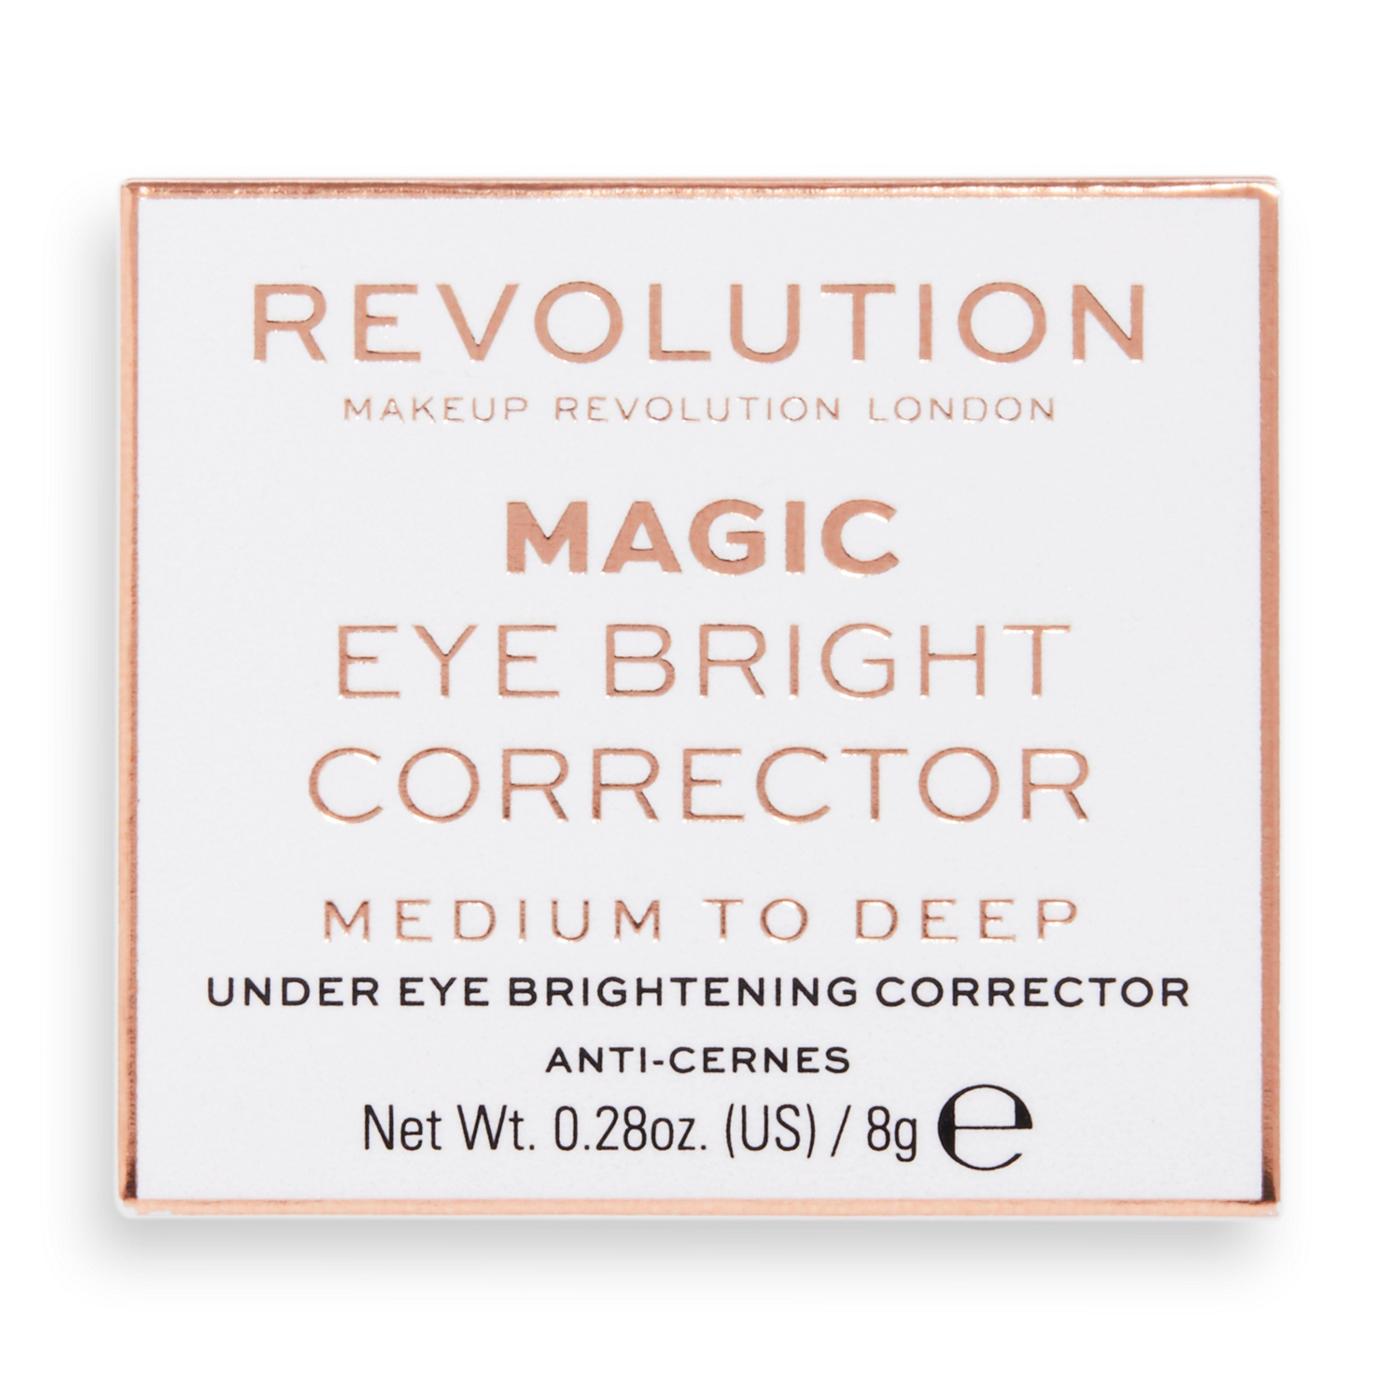 Makeup Revolution Magic Eye Bright Corrector - Medium To Deep; image 1 of 3